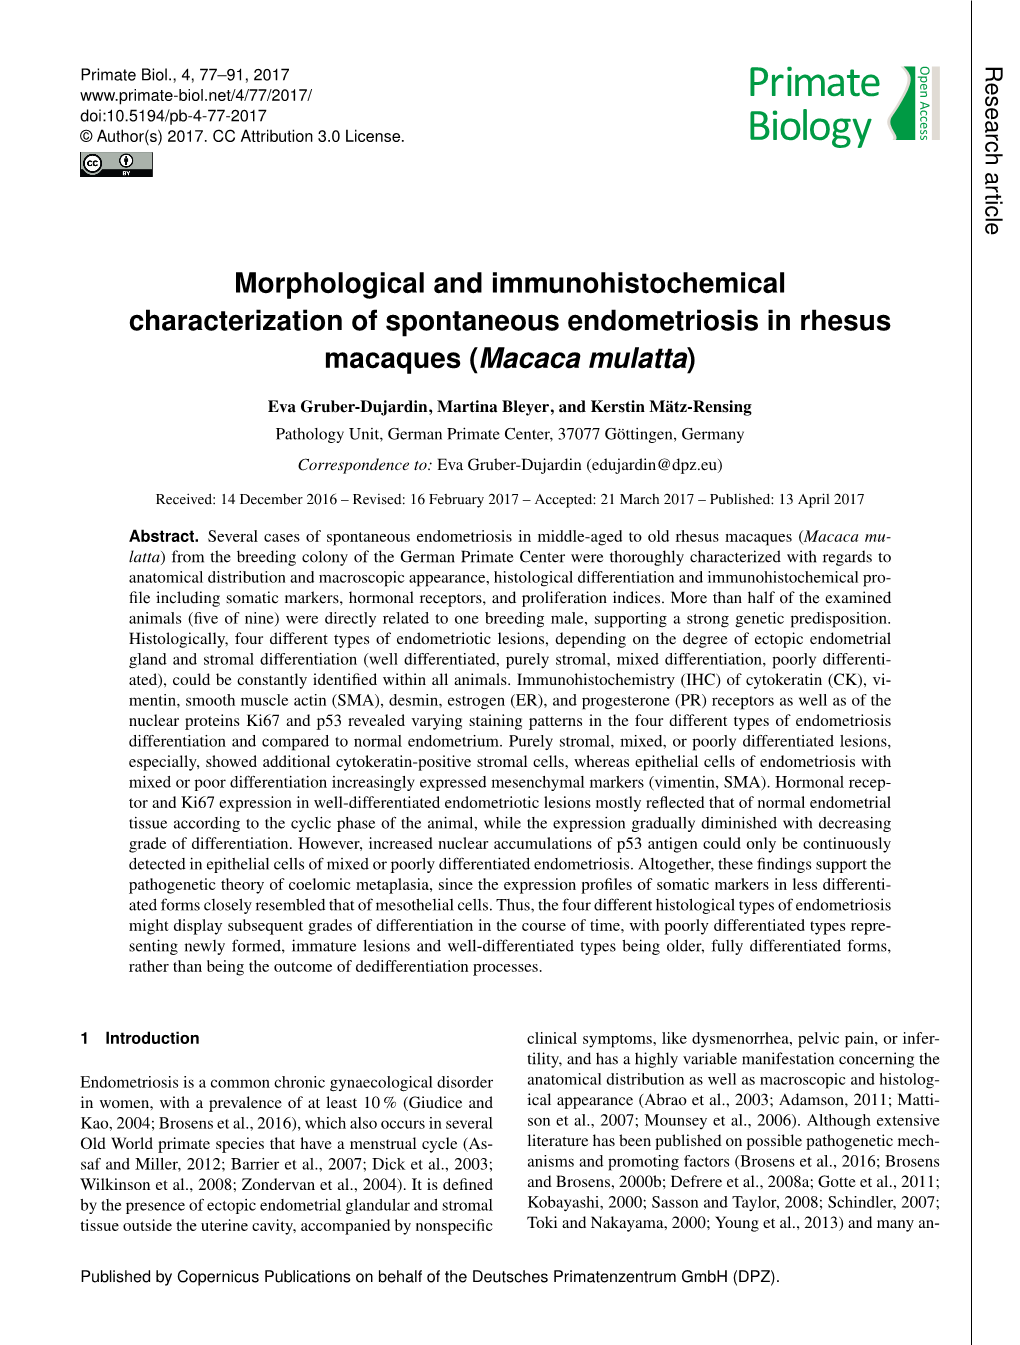 Morphological and Immunohistochemical Characterization of Spontaneous Endometriosis in Rhesus Macaques (Macaca Mulatta)